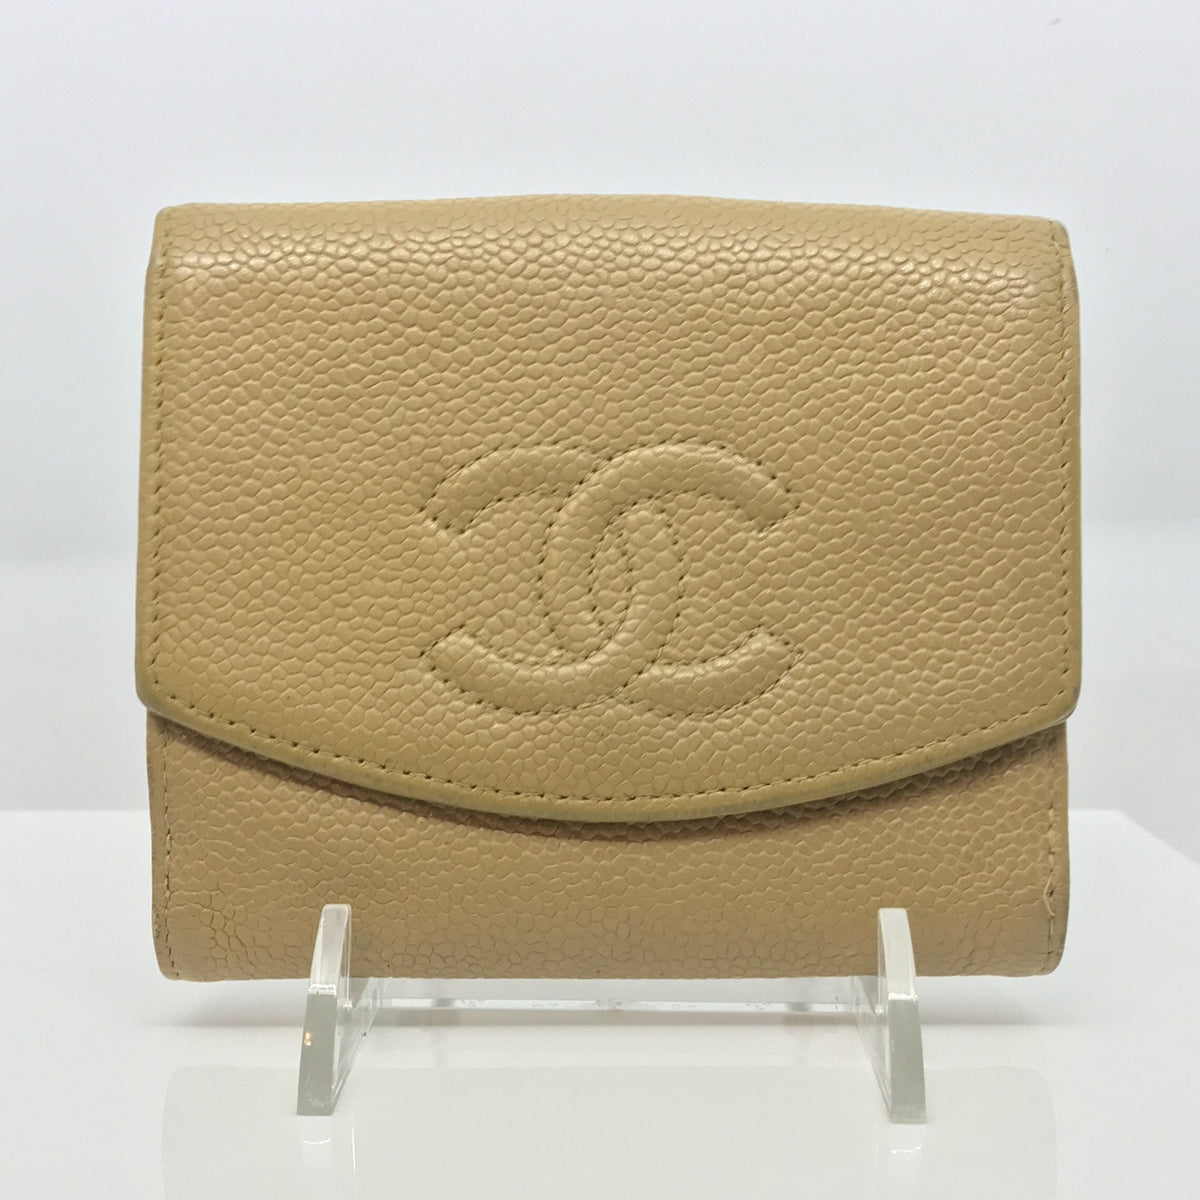 Chanel Rare 99a CC Logo Address Plate Keychain Bag Charm